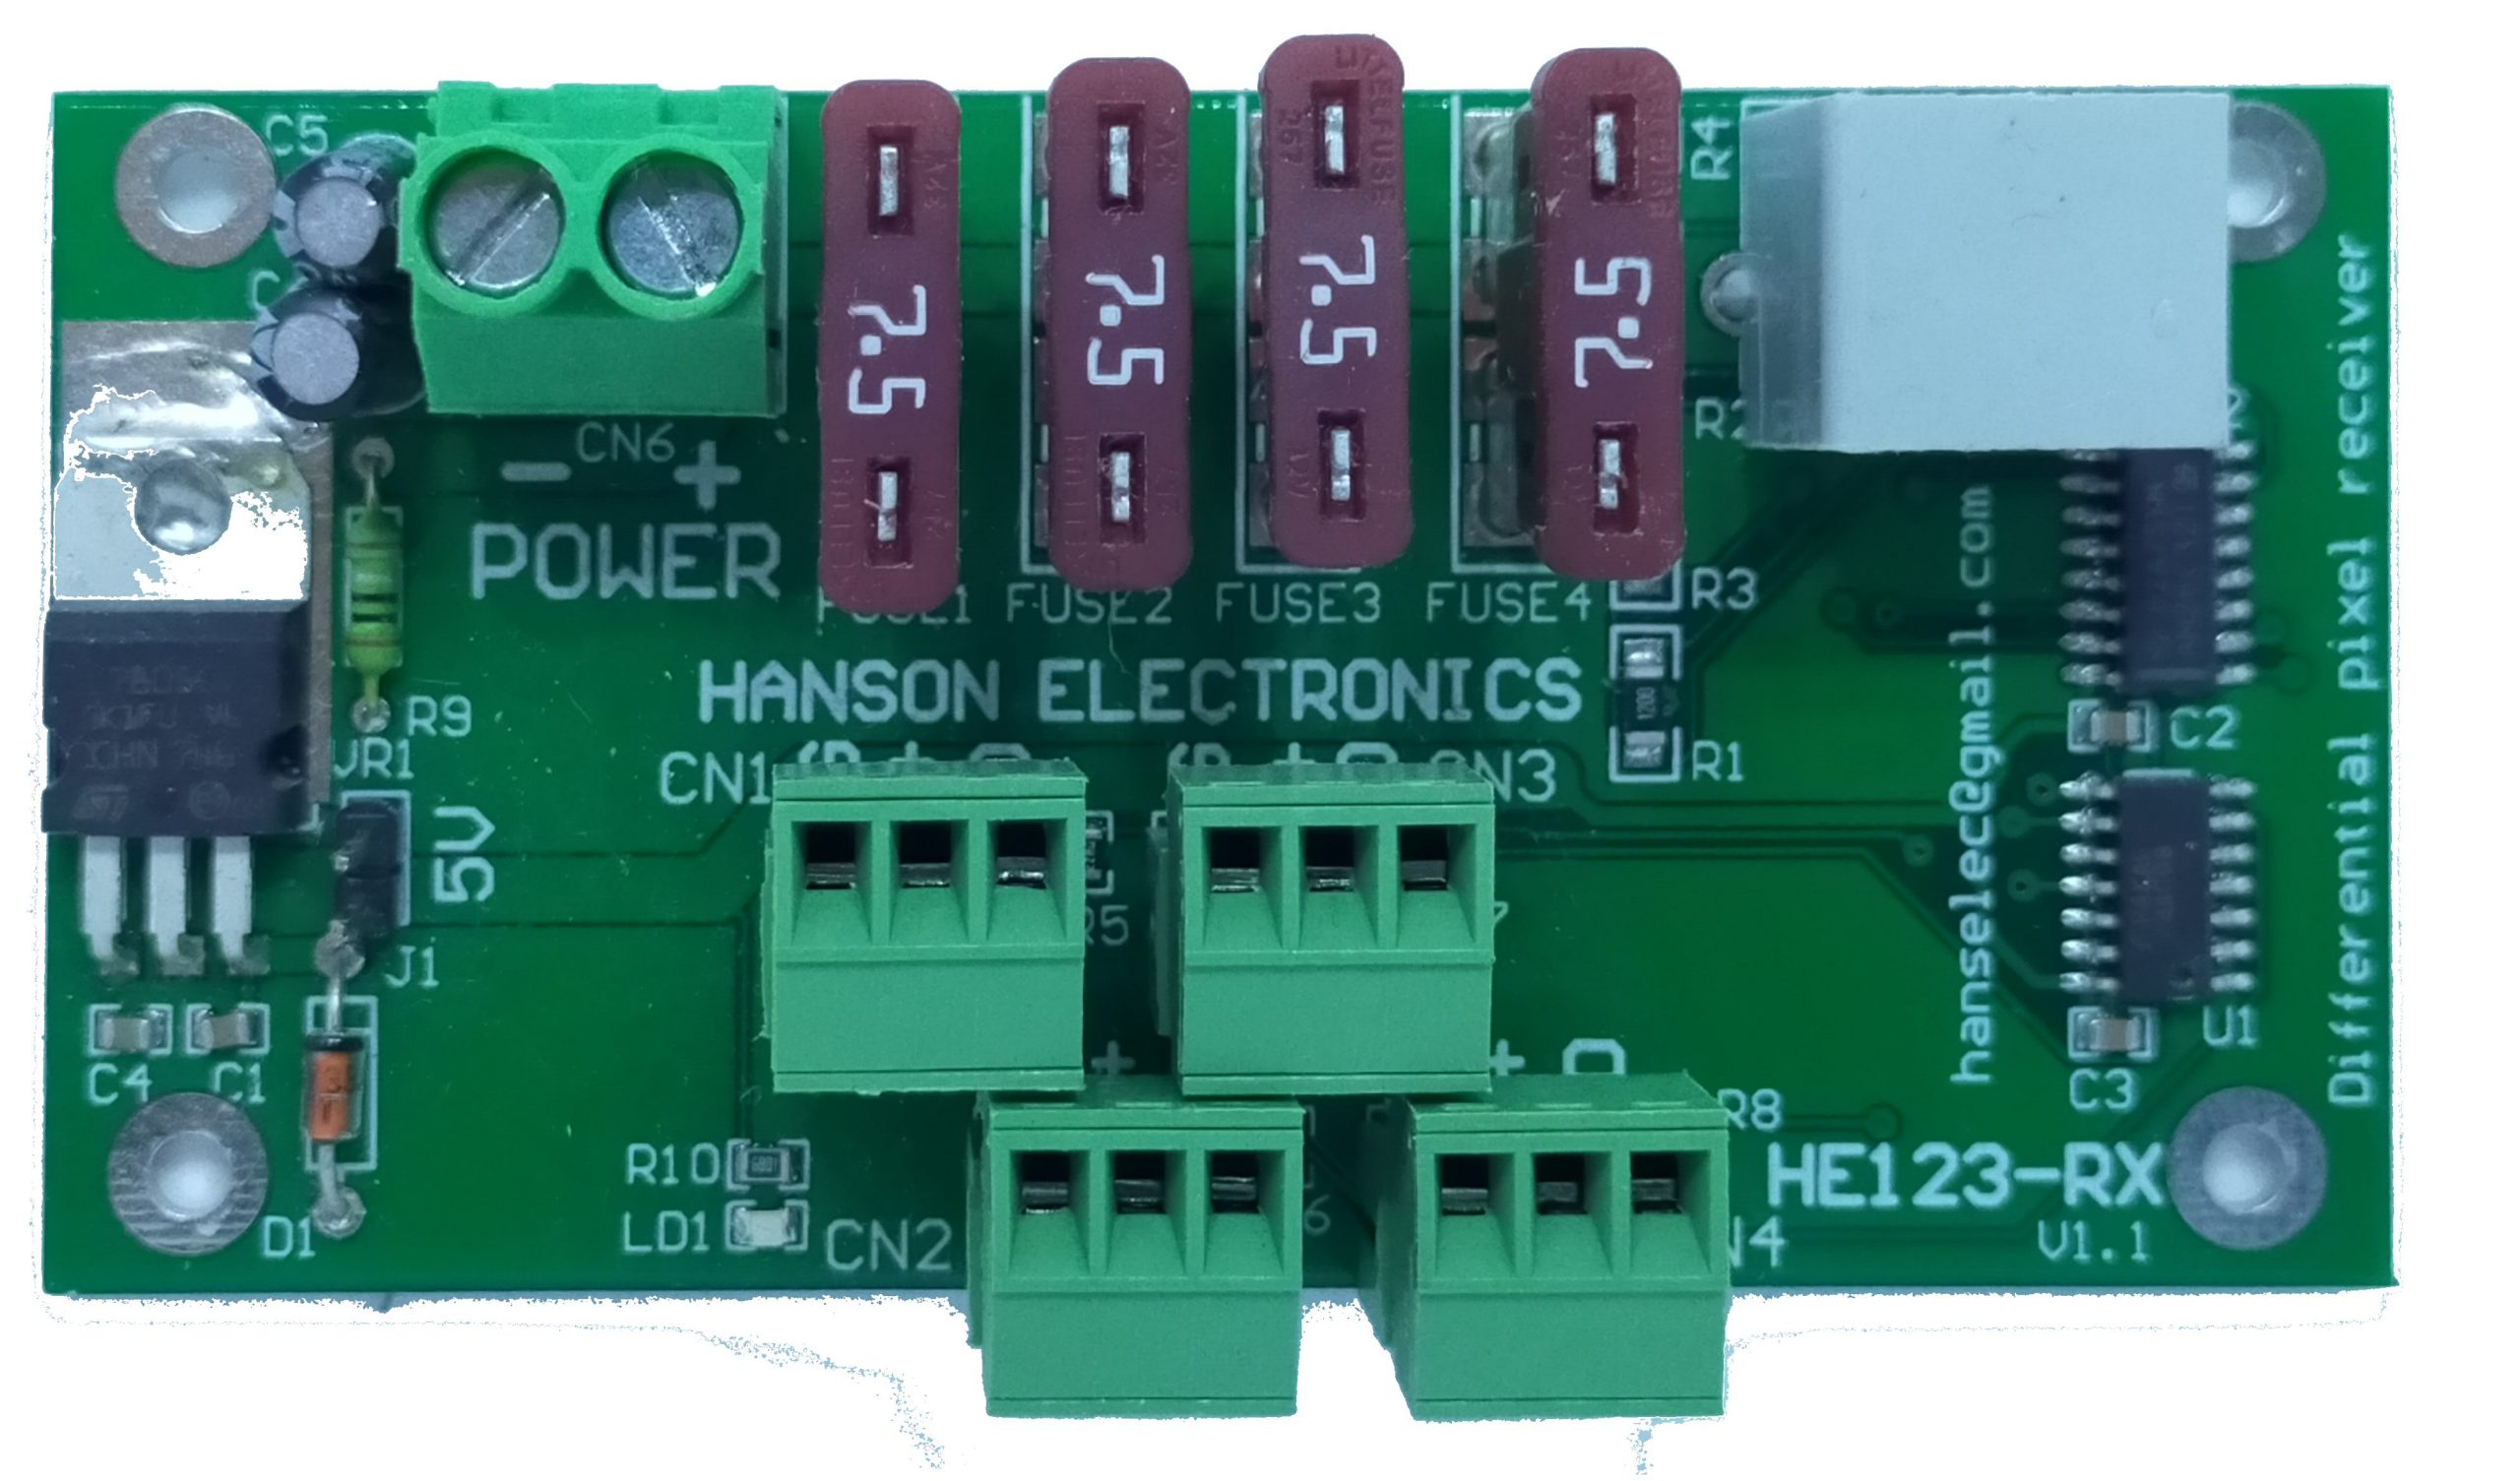 www.hansonelectronics.com.au